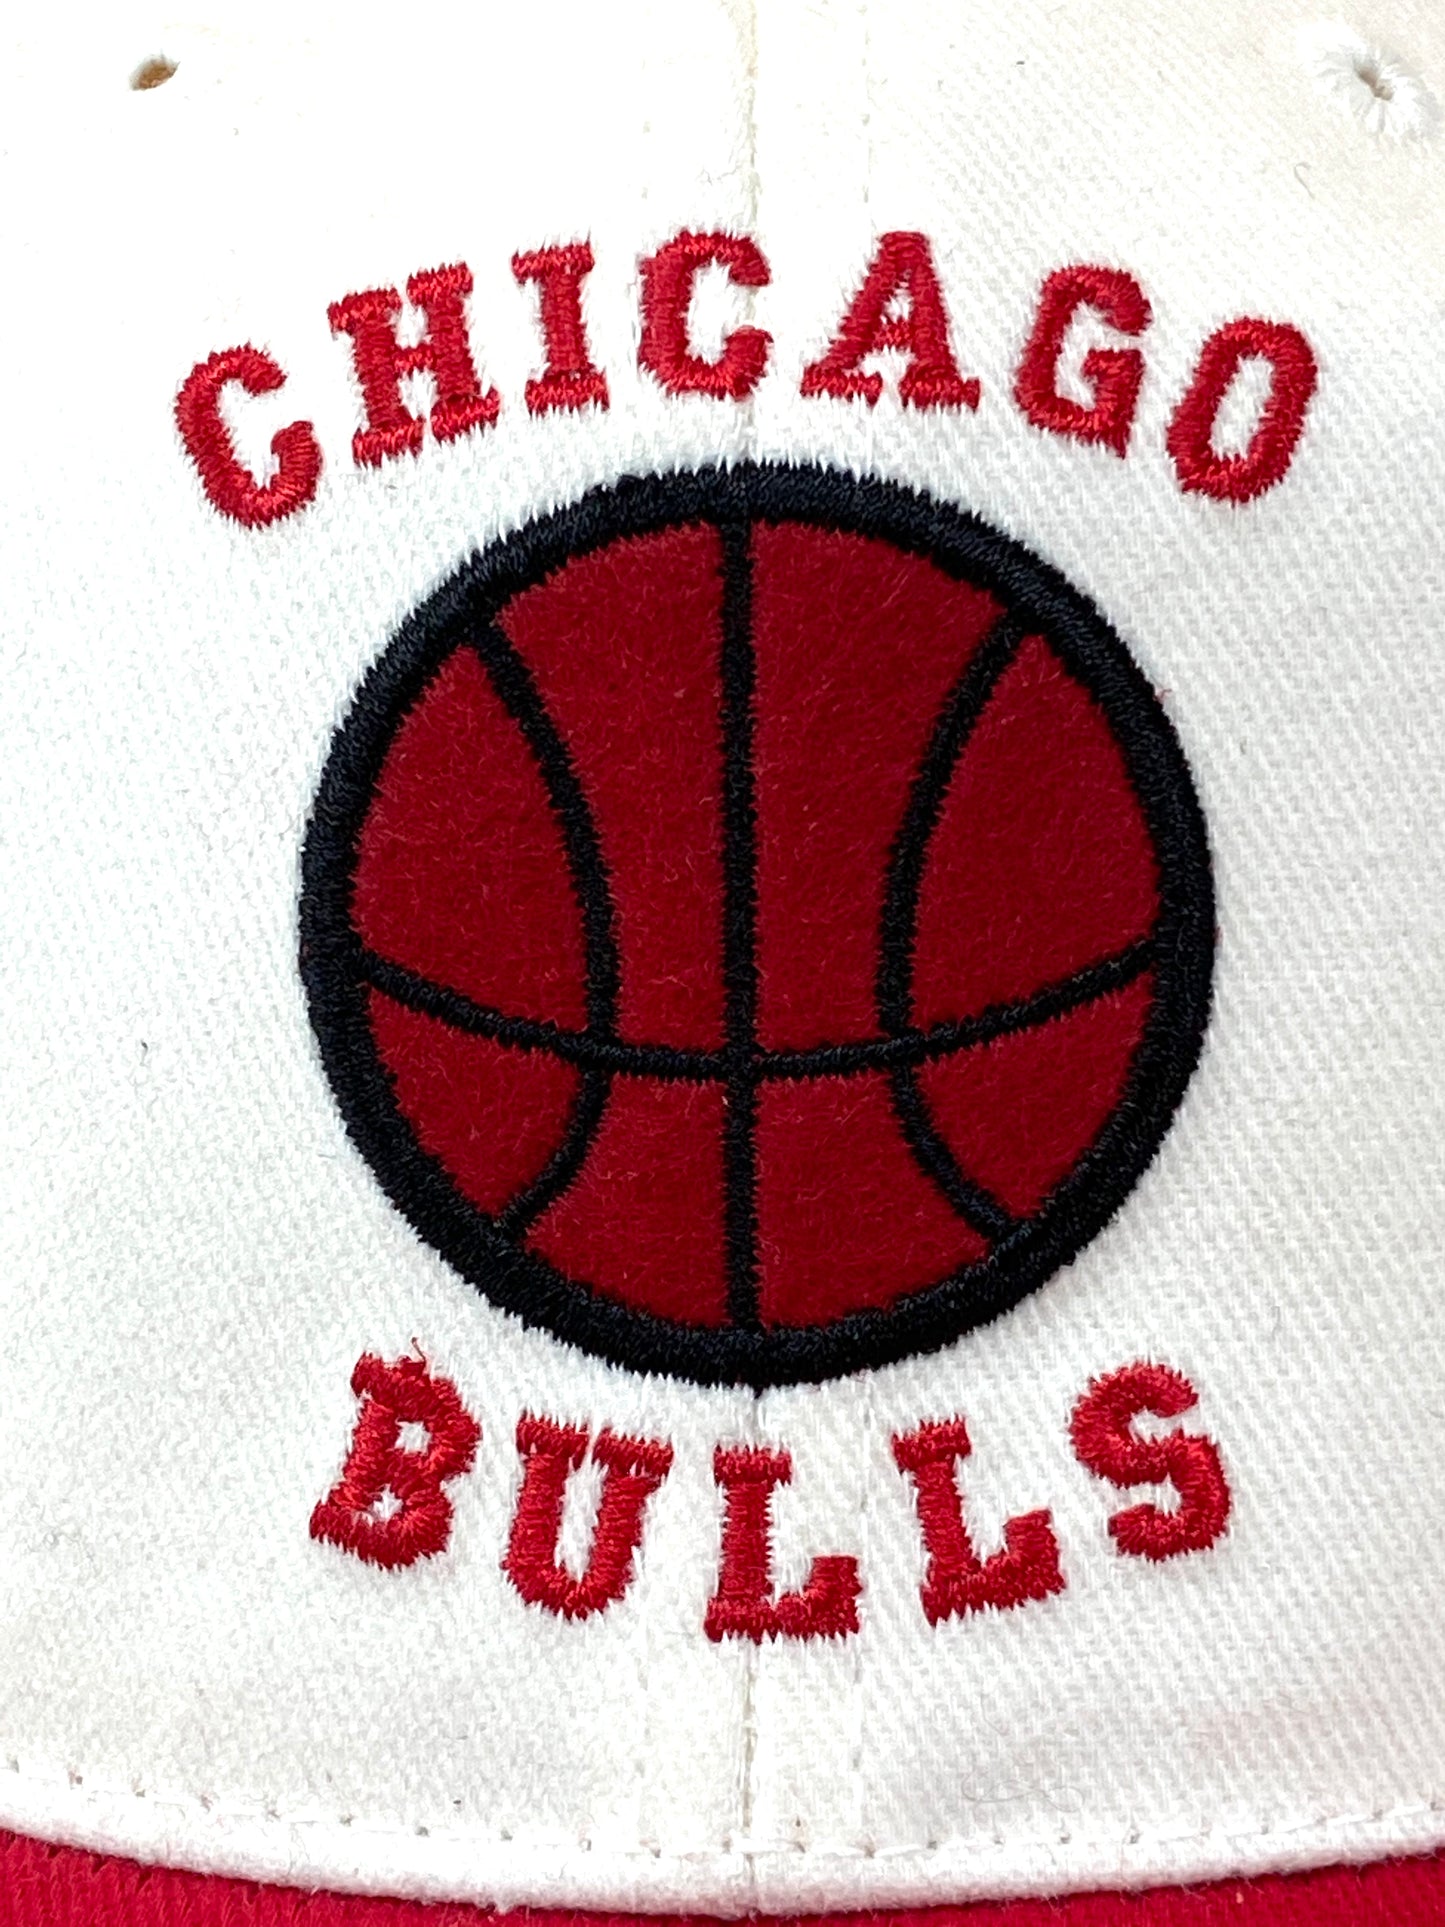 Chicago Bulls Vintage NBA White "Basketball" Cap by Annco